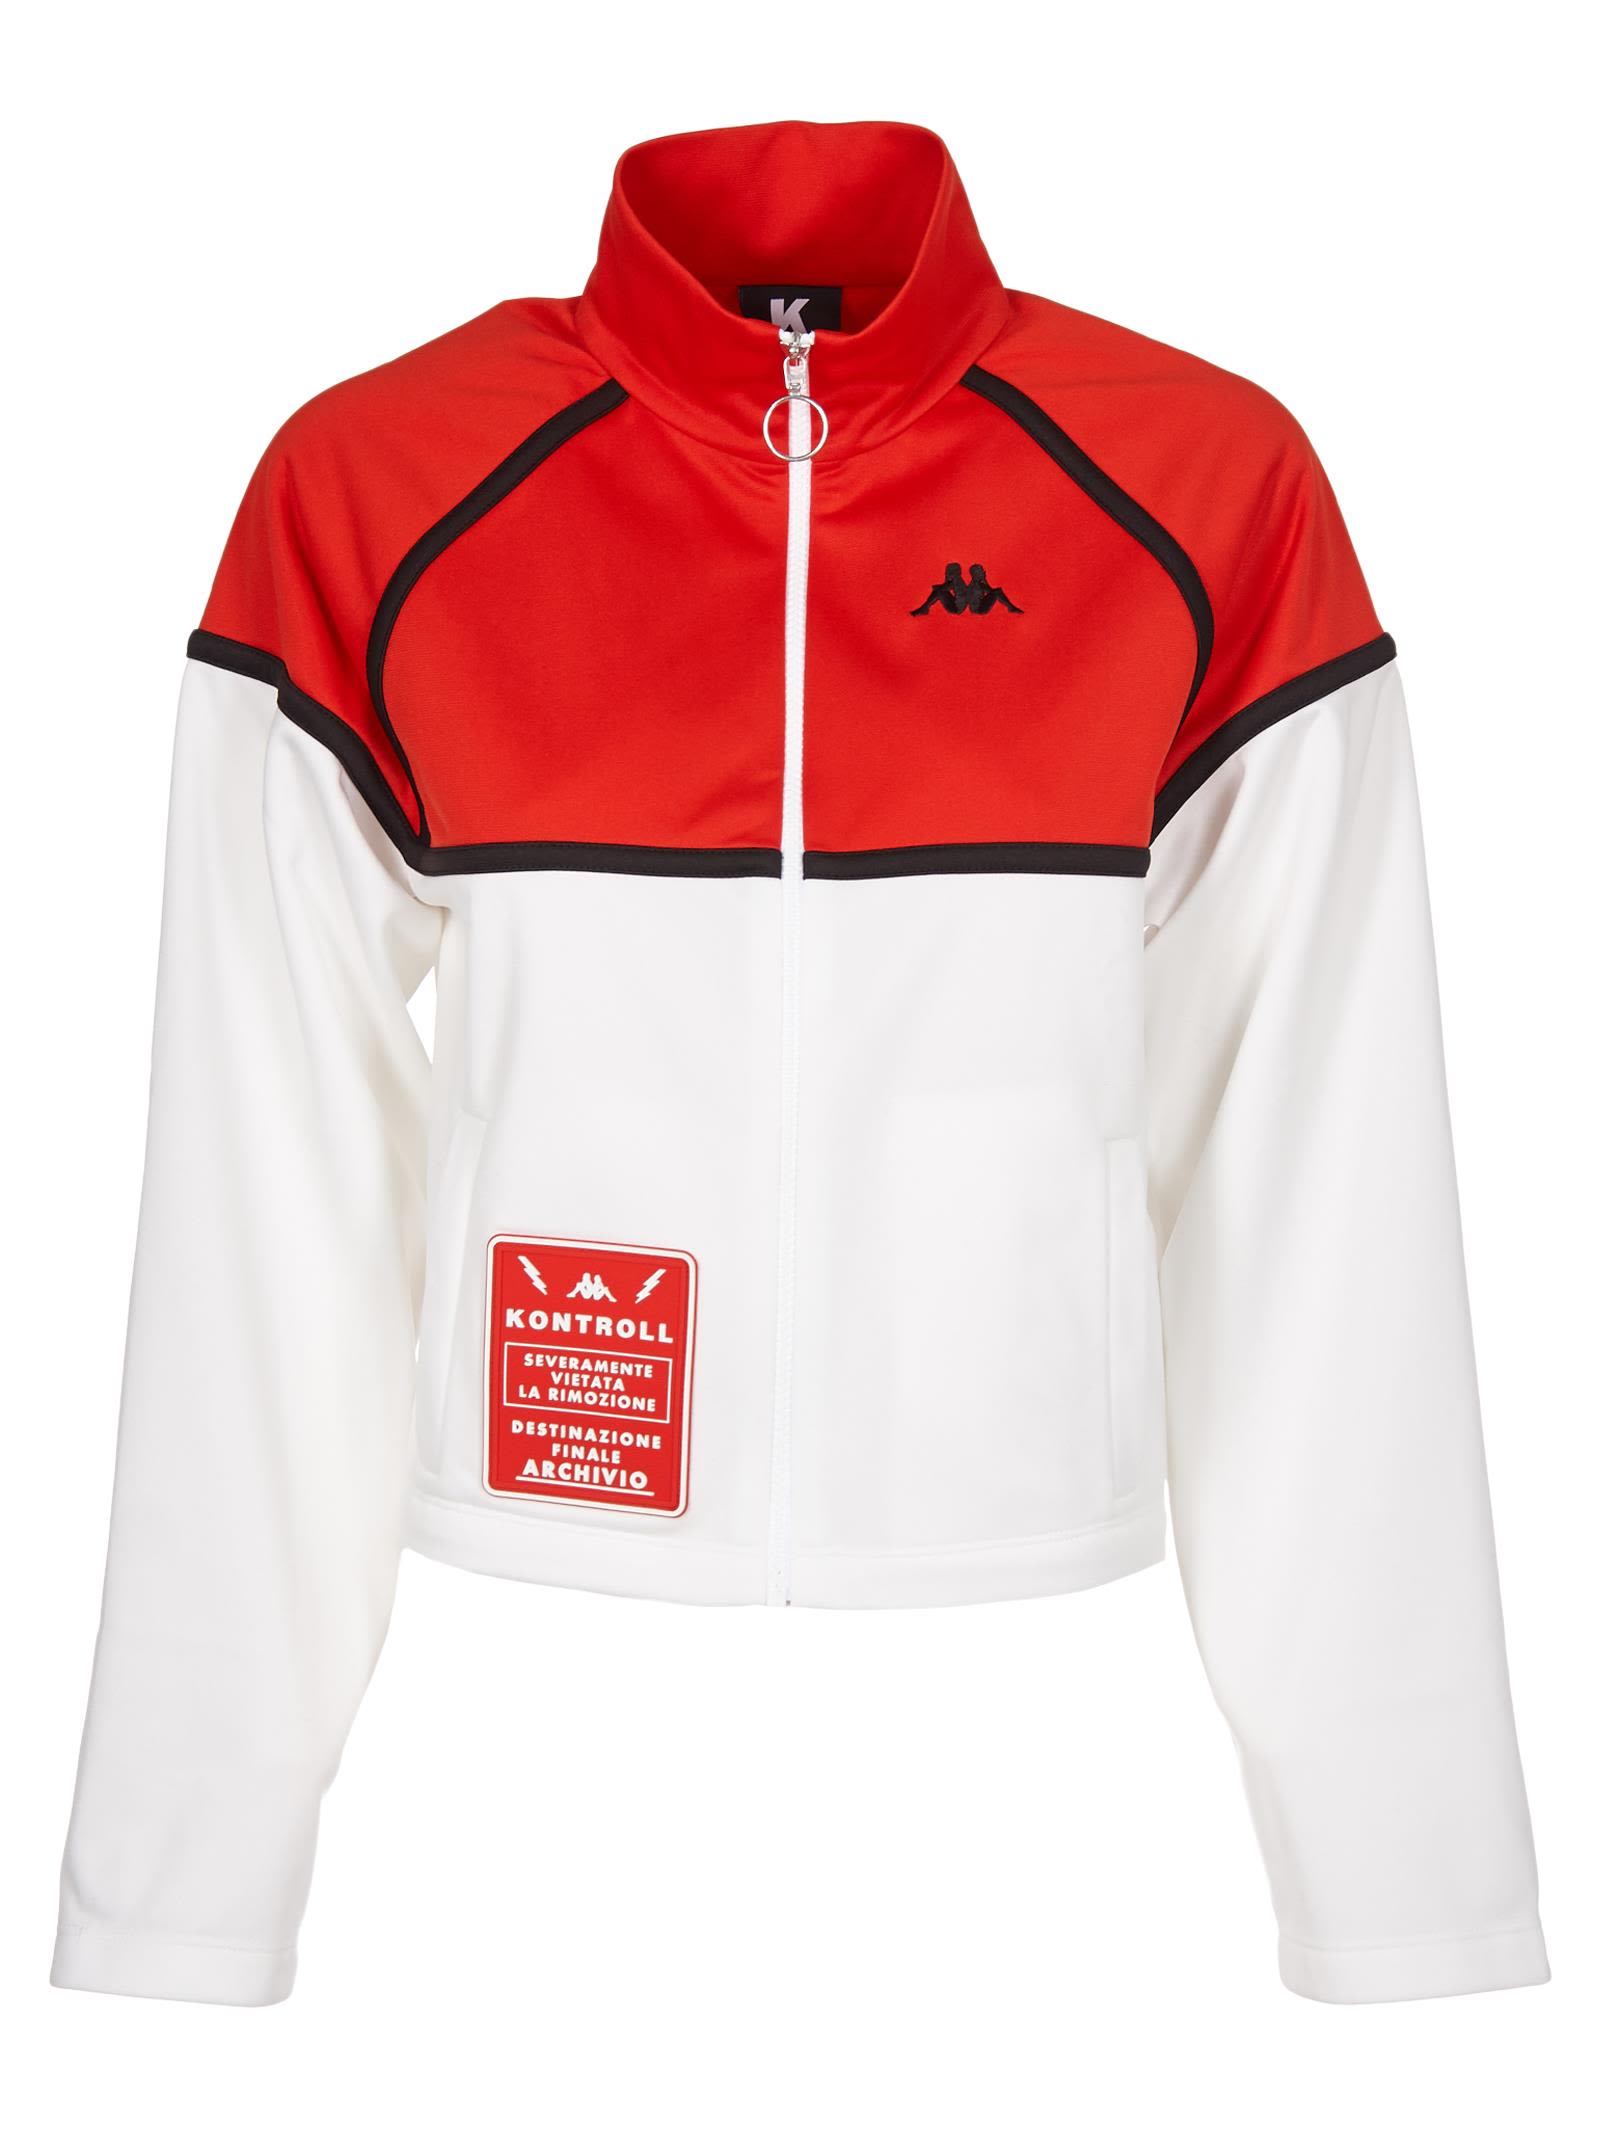 Red and White Kappa Logo - Kappa Zip Up Jacket In White Red